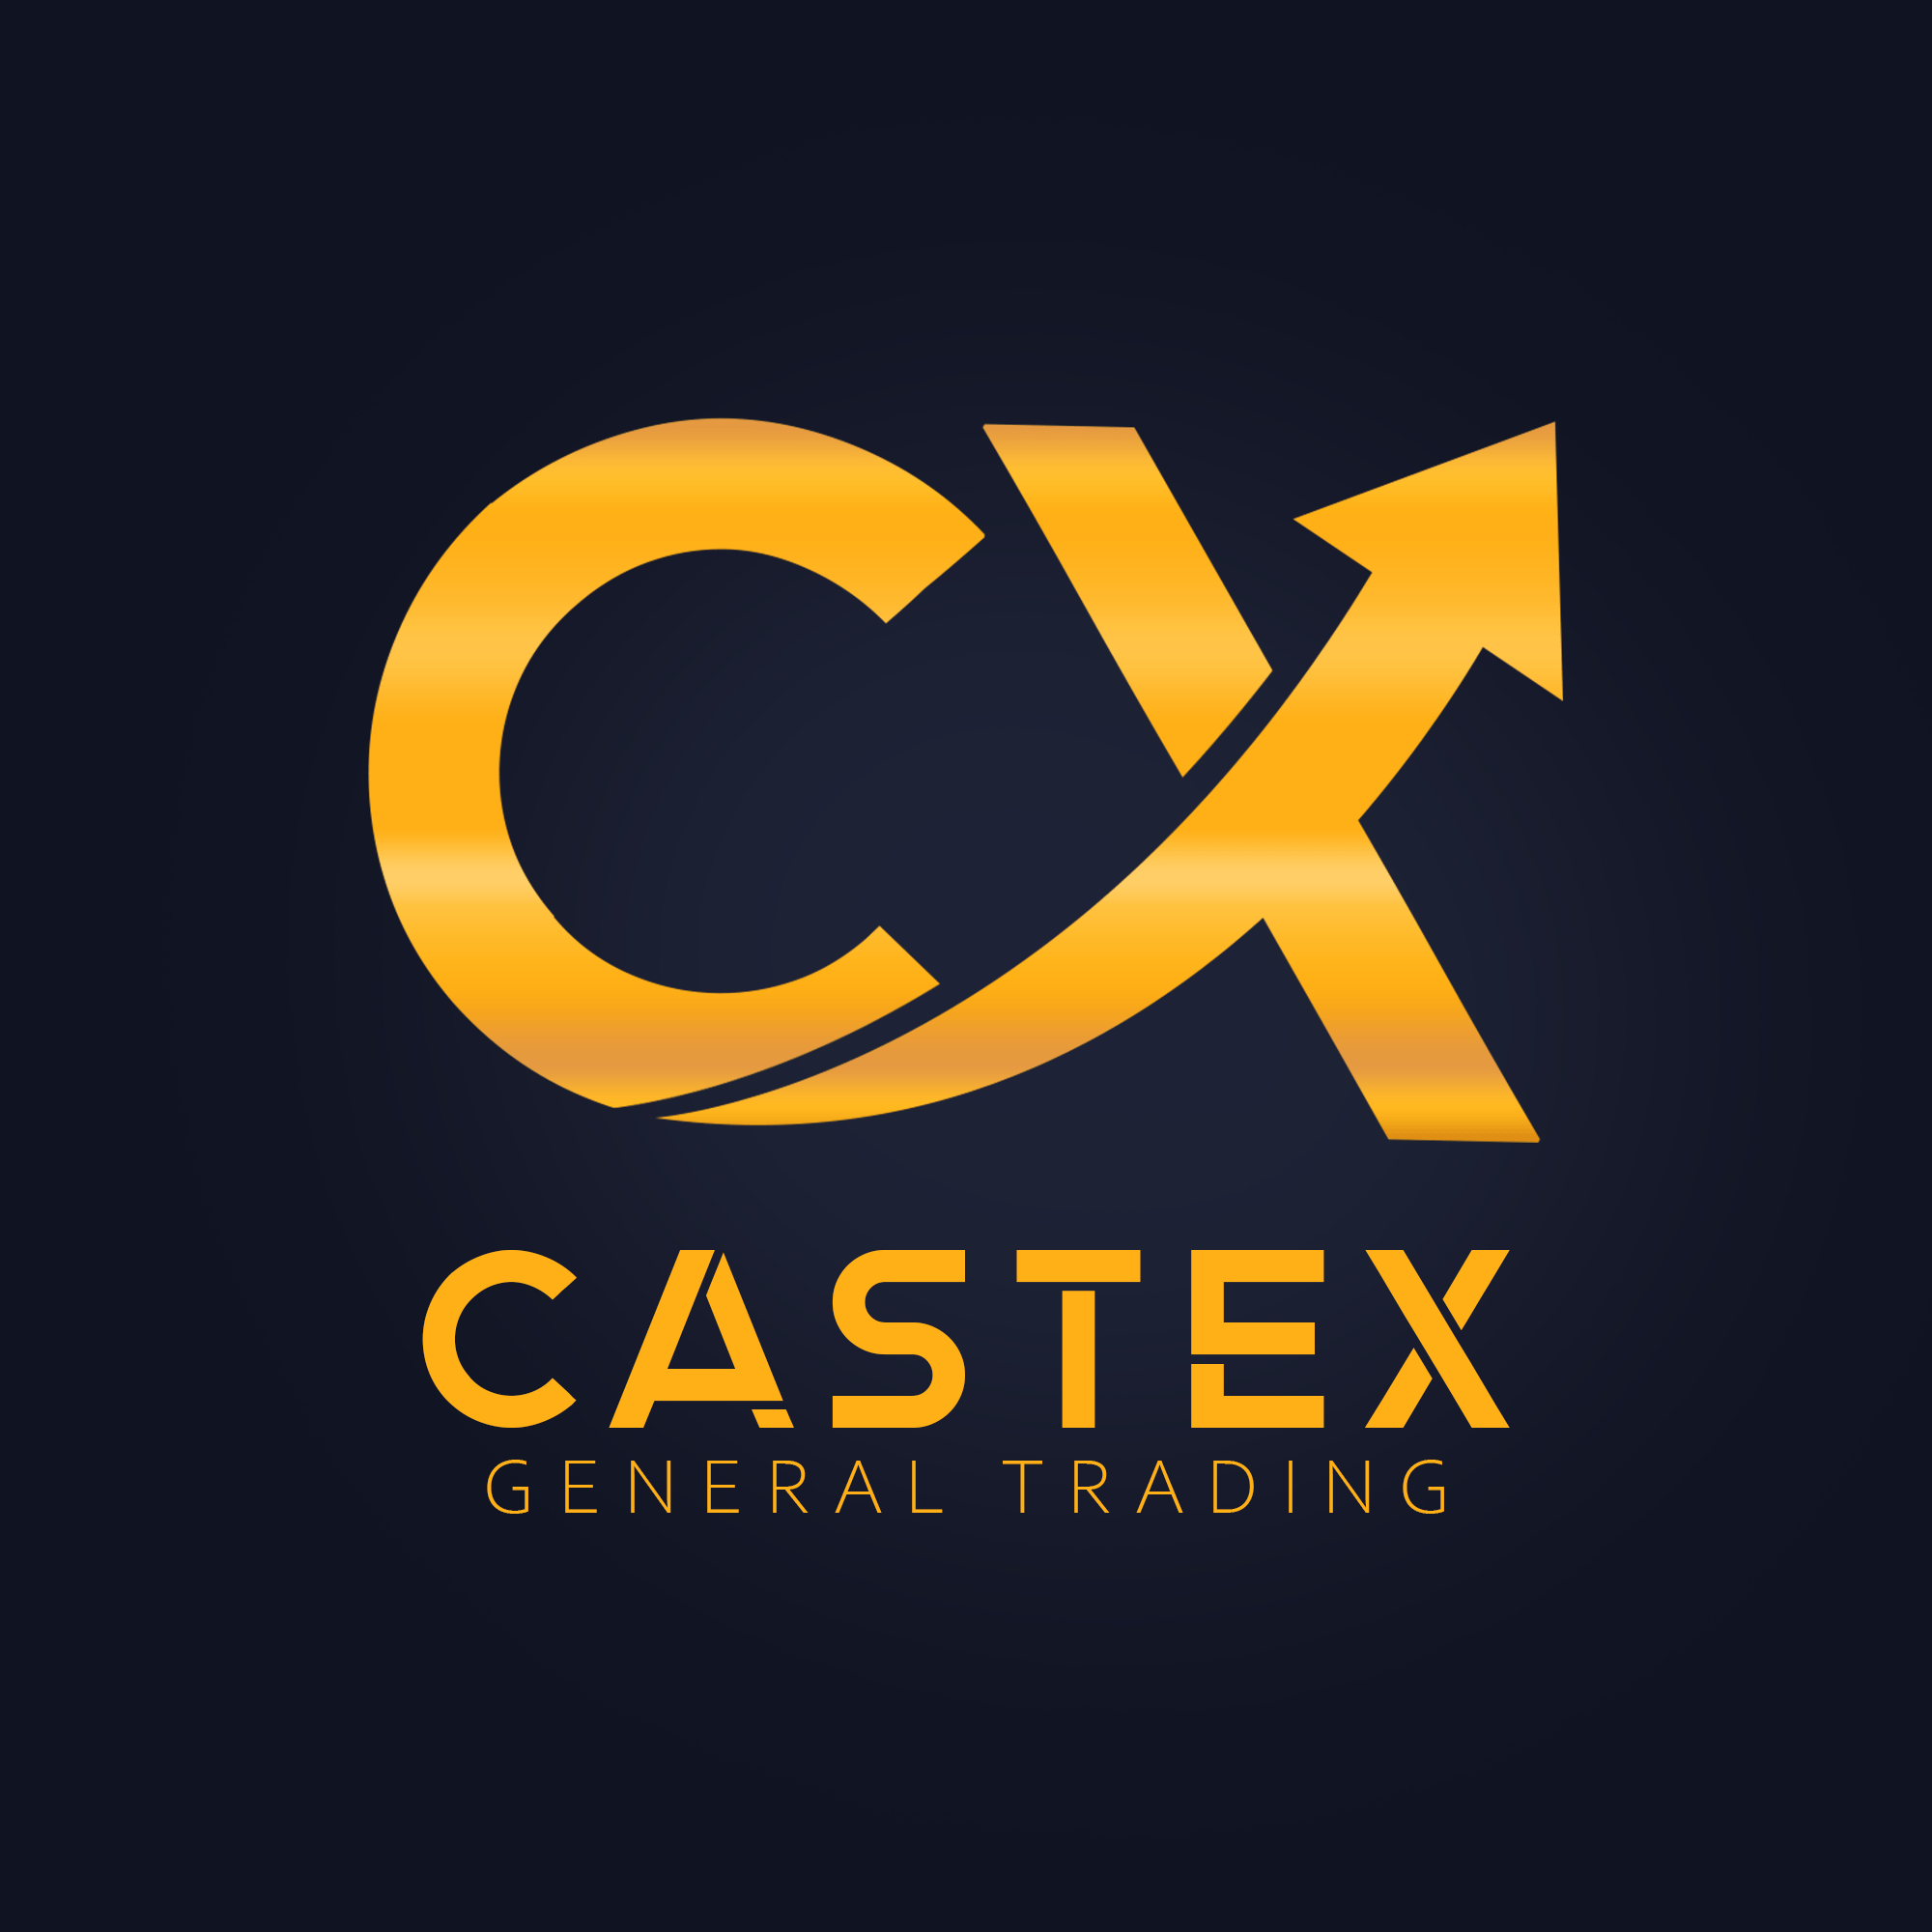 Castex General Trading